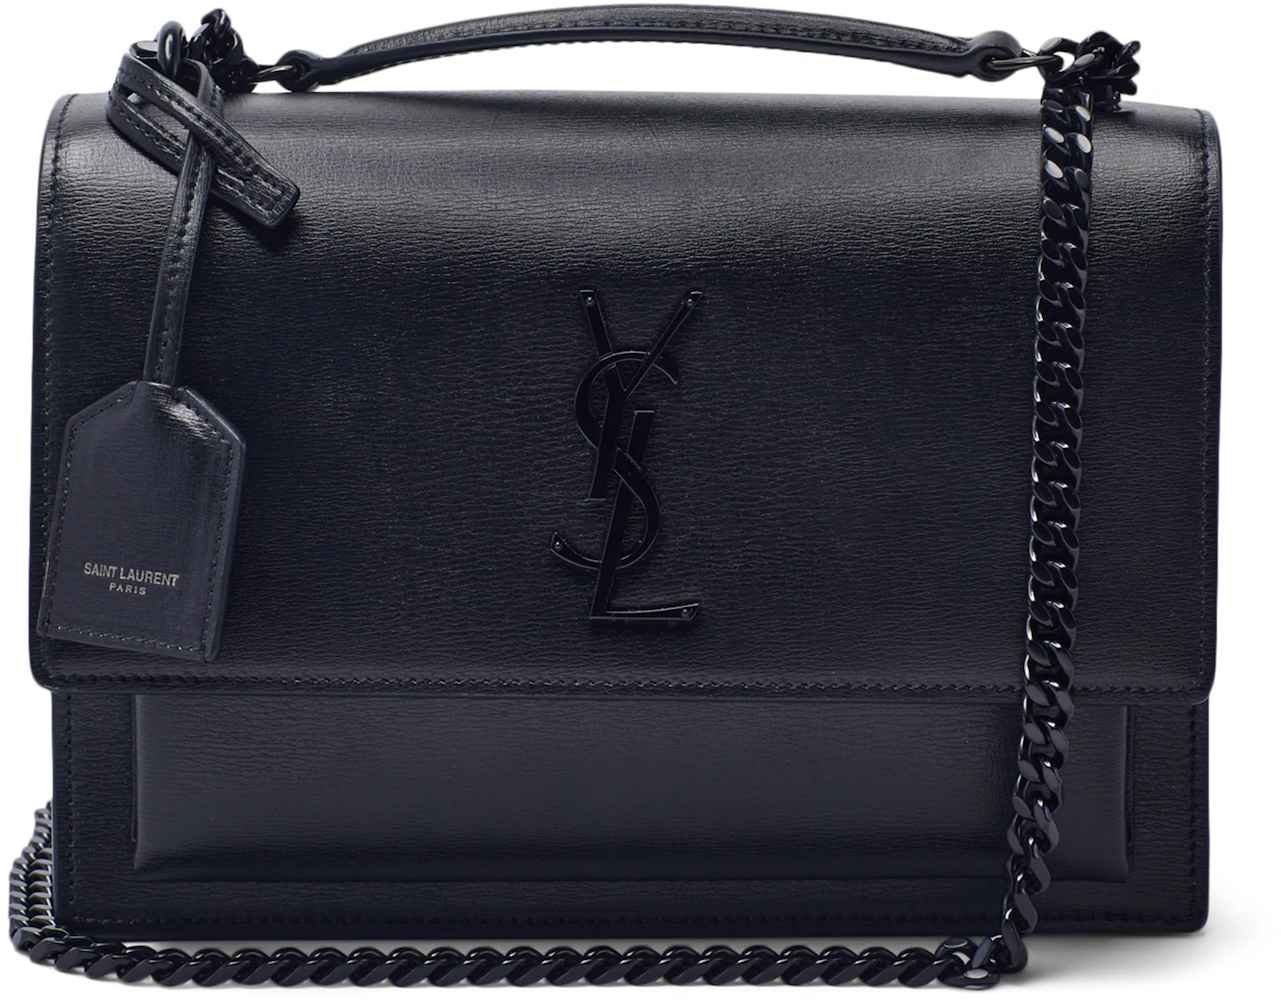 Black Sunset medium YSL-plaque leather shoulder bag, Saint Laurent